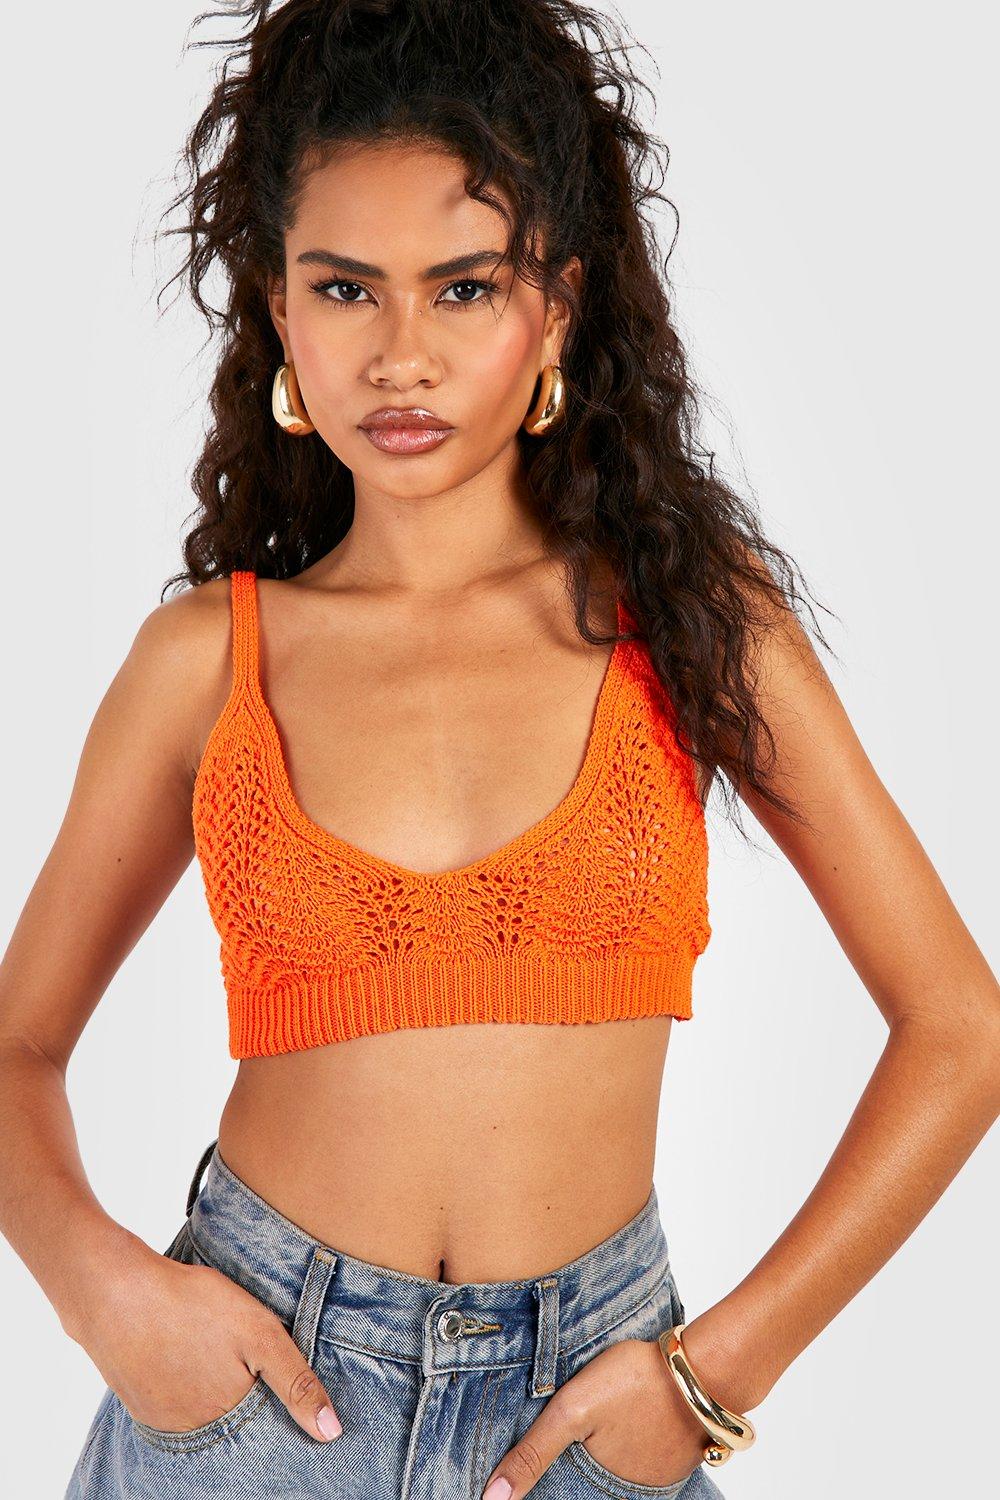 https://media.boohoo.com/i/boohoo/gzz56307_orange_xl_3/female-orange-crochet-bralette